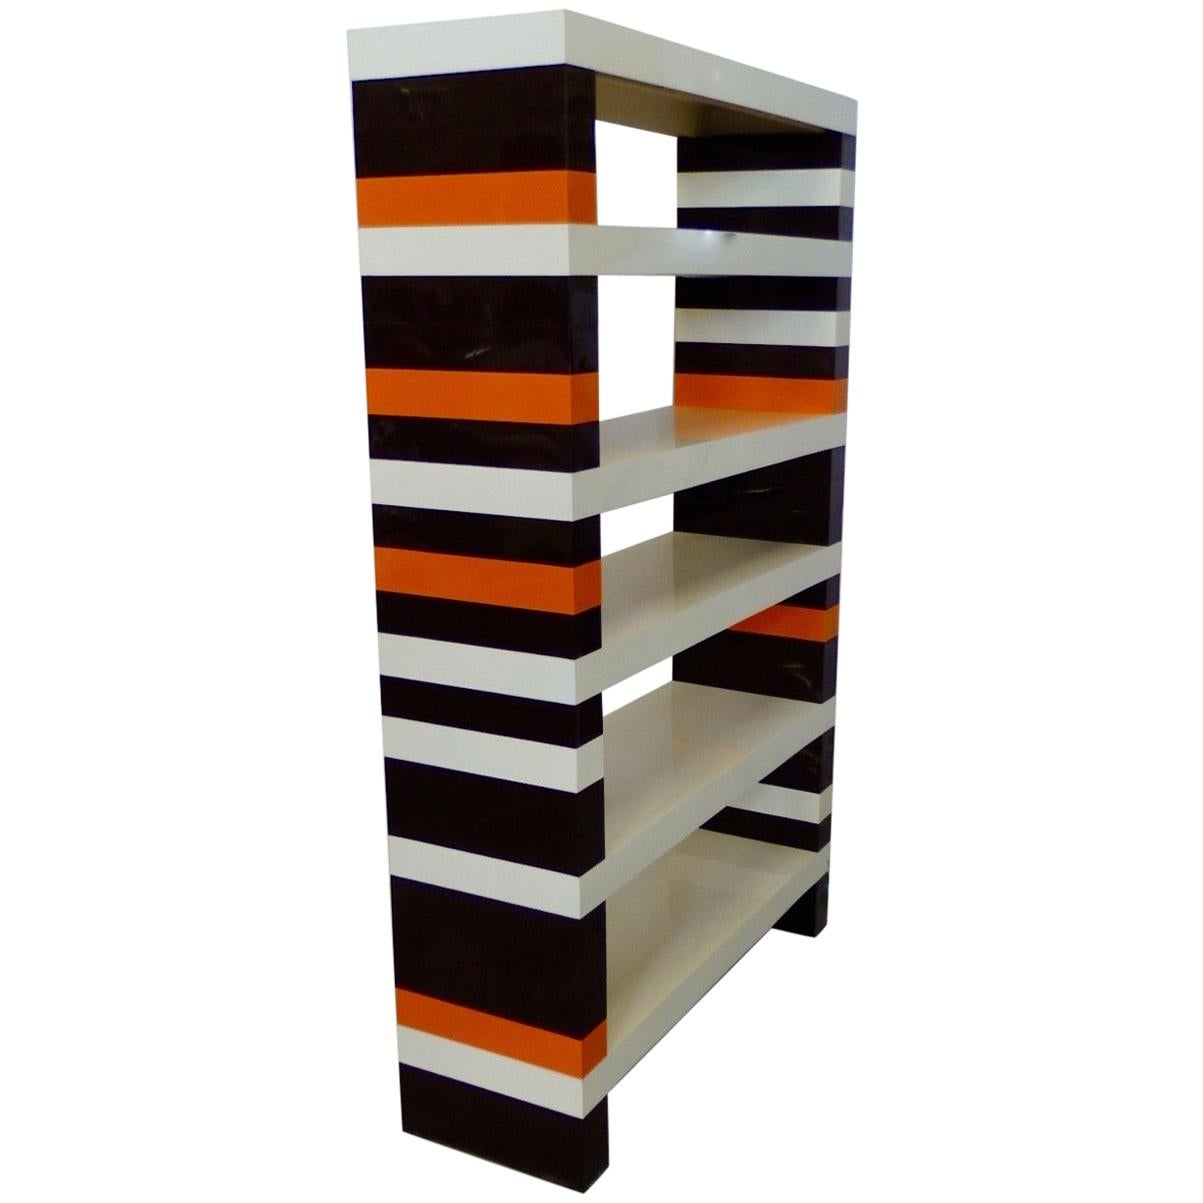 Op Pop Mod DePas Durbino Lomazzi for Kartell Modular Brick Shelf System